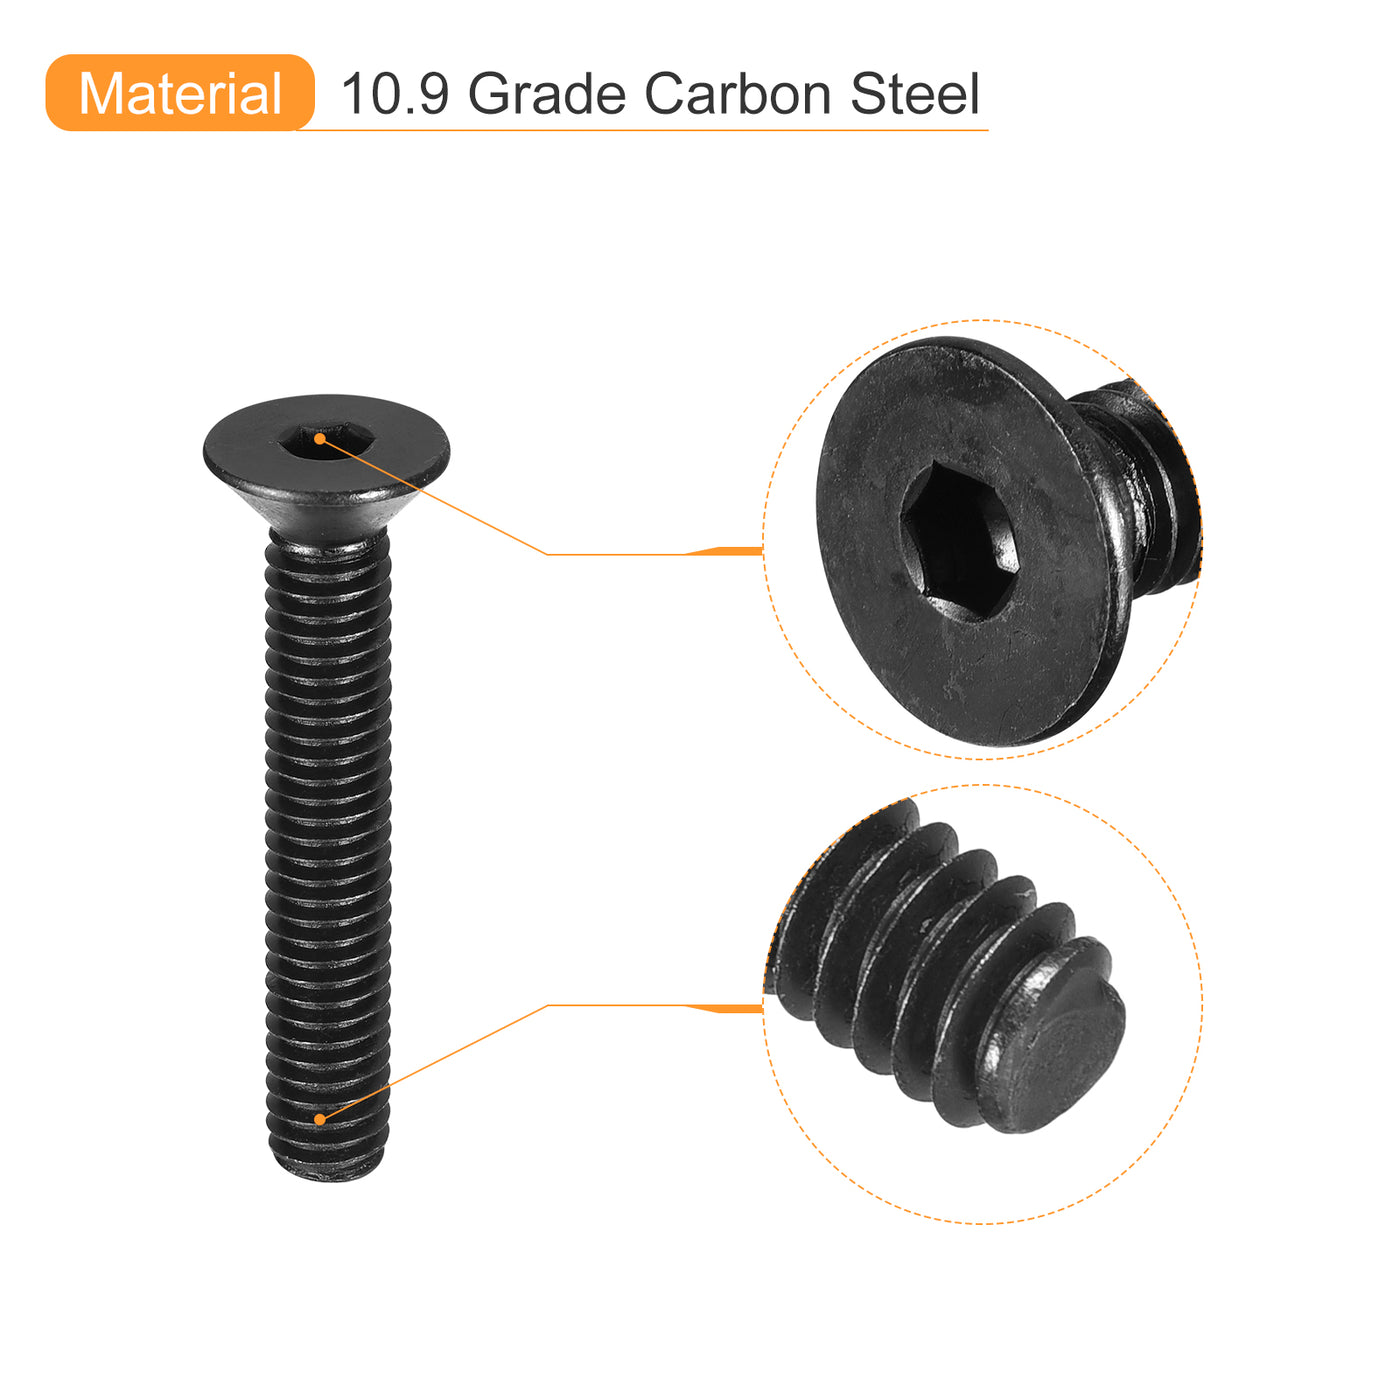 uxcell Uxcell 5/16-18x2" Flat Head Socket Cap Screws, 10.9 Grade Carbon Steel, 20PCS